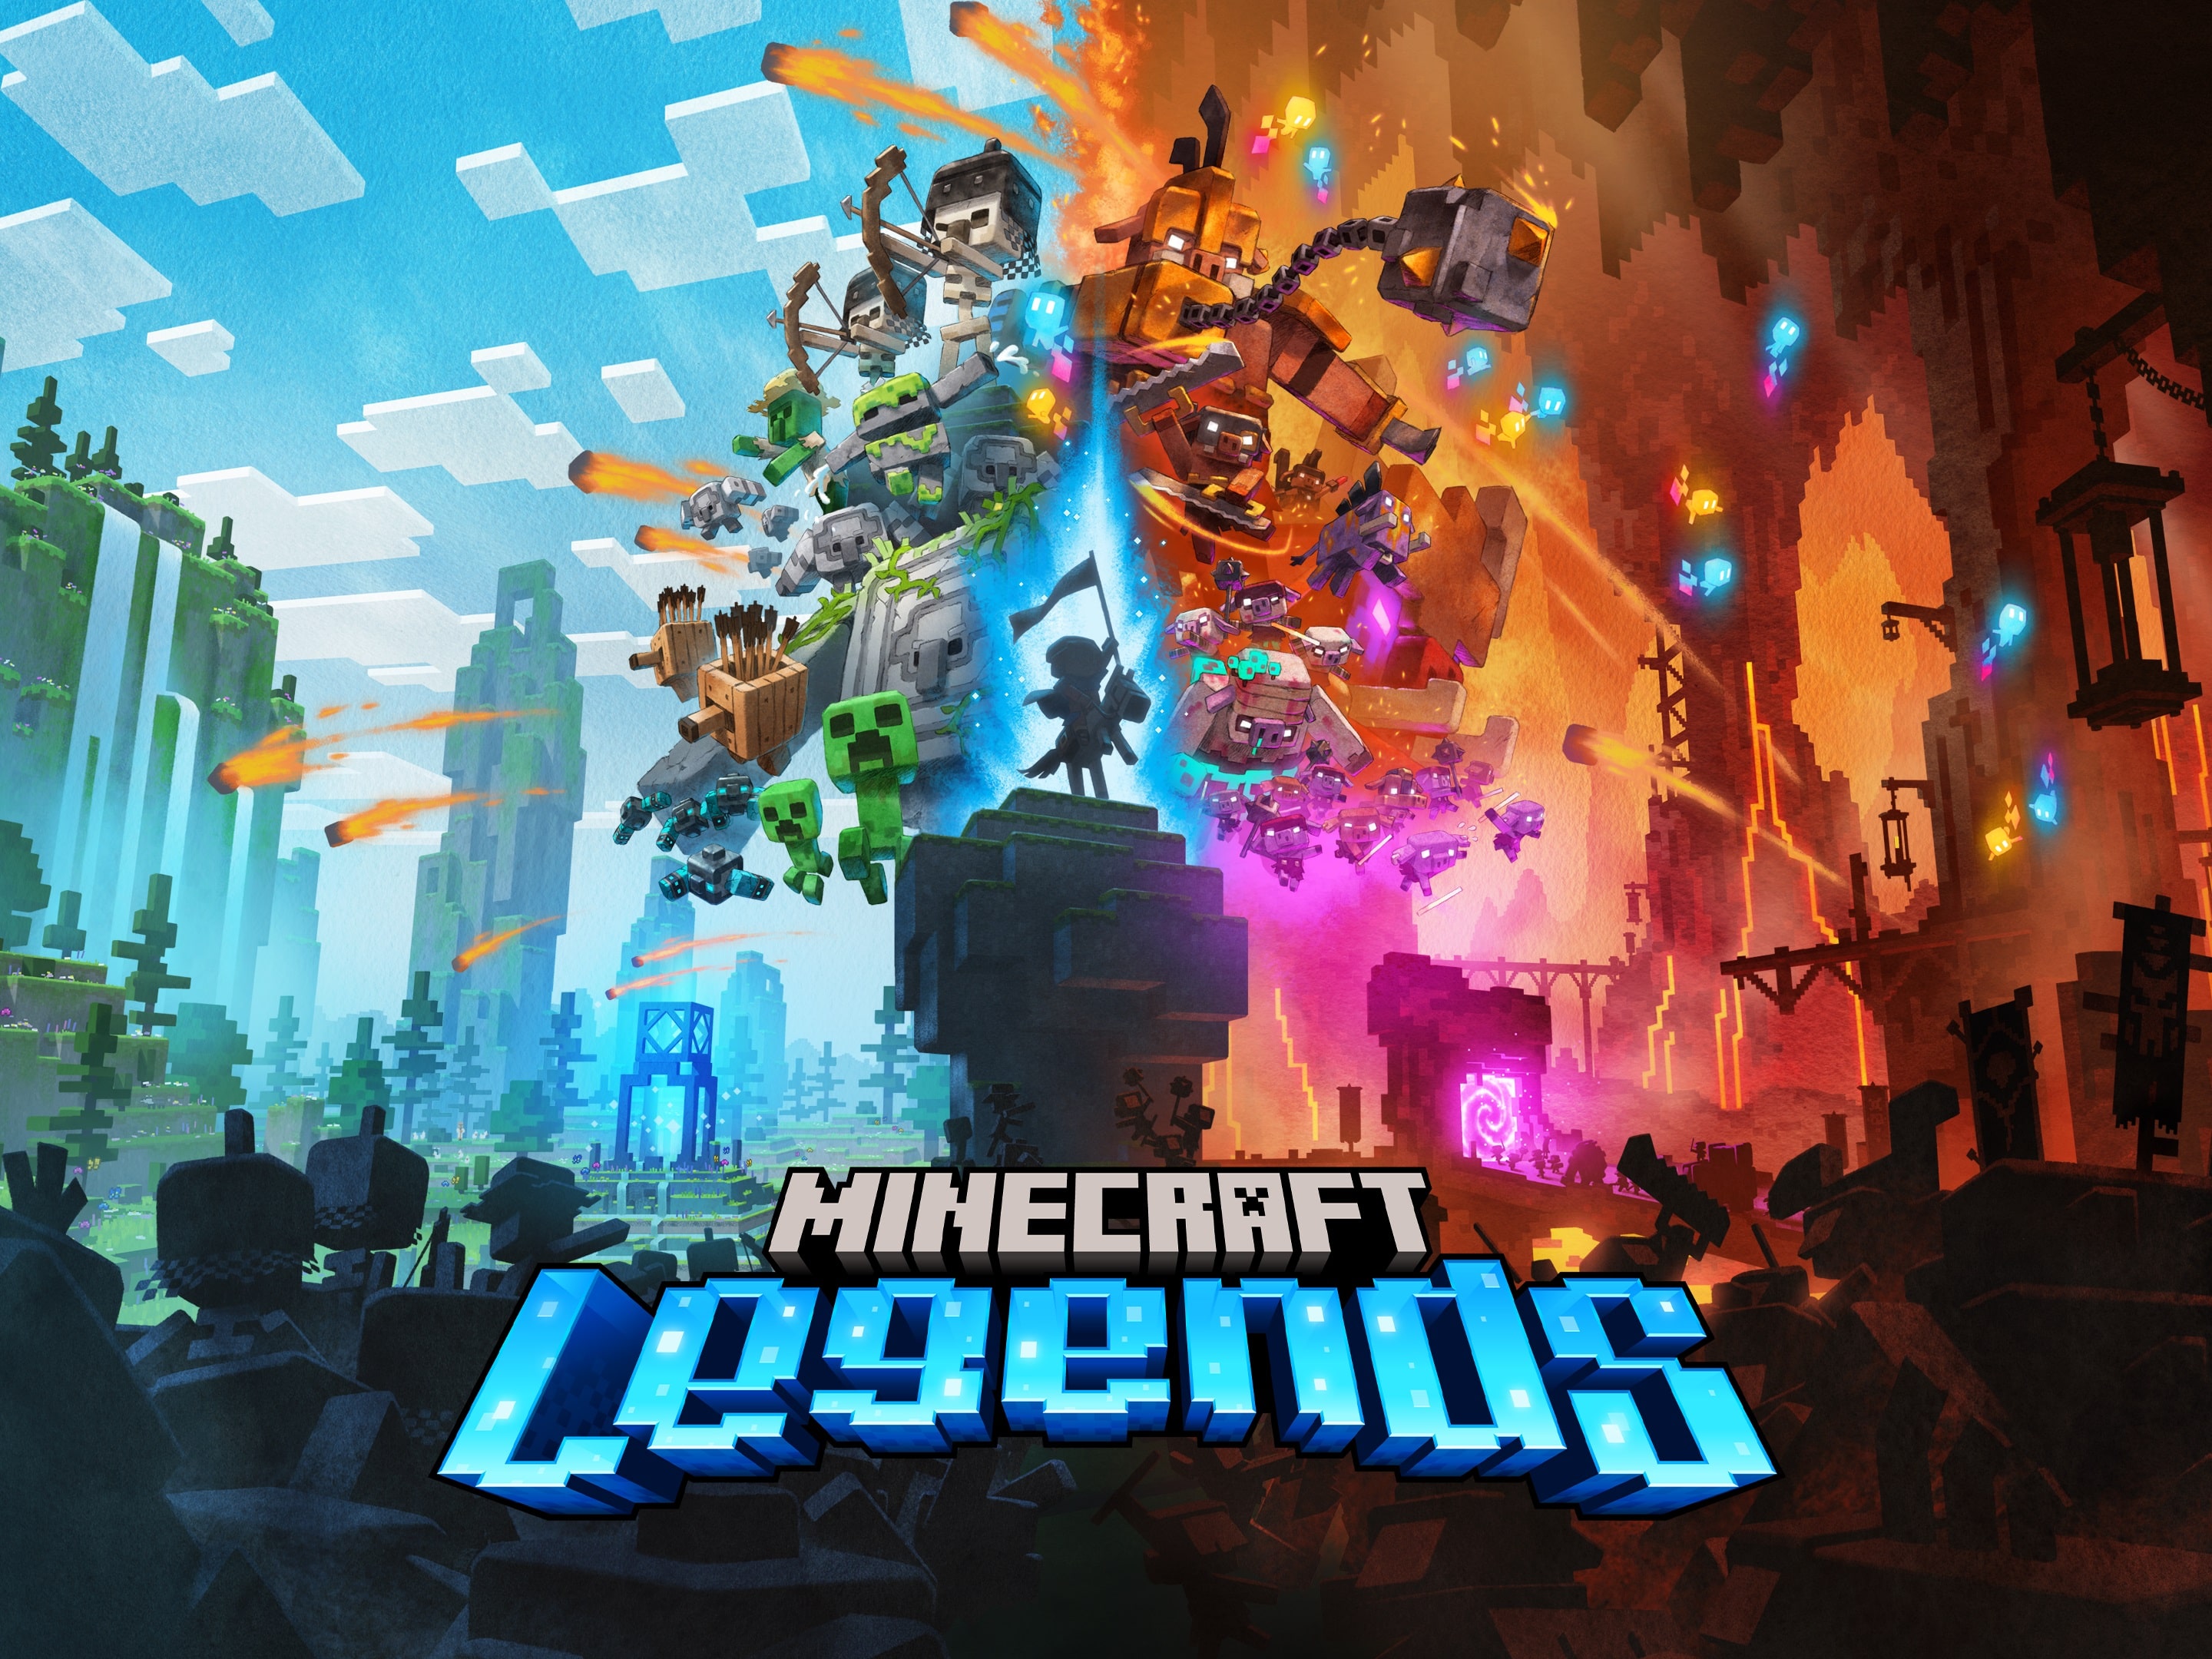 Minecraft Legends Deluxe Edition PS4 - Cadê Meu Jogo